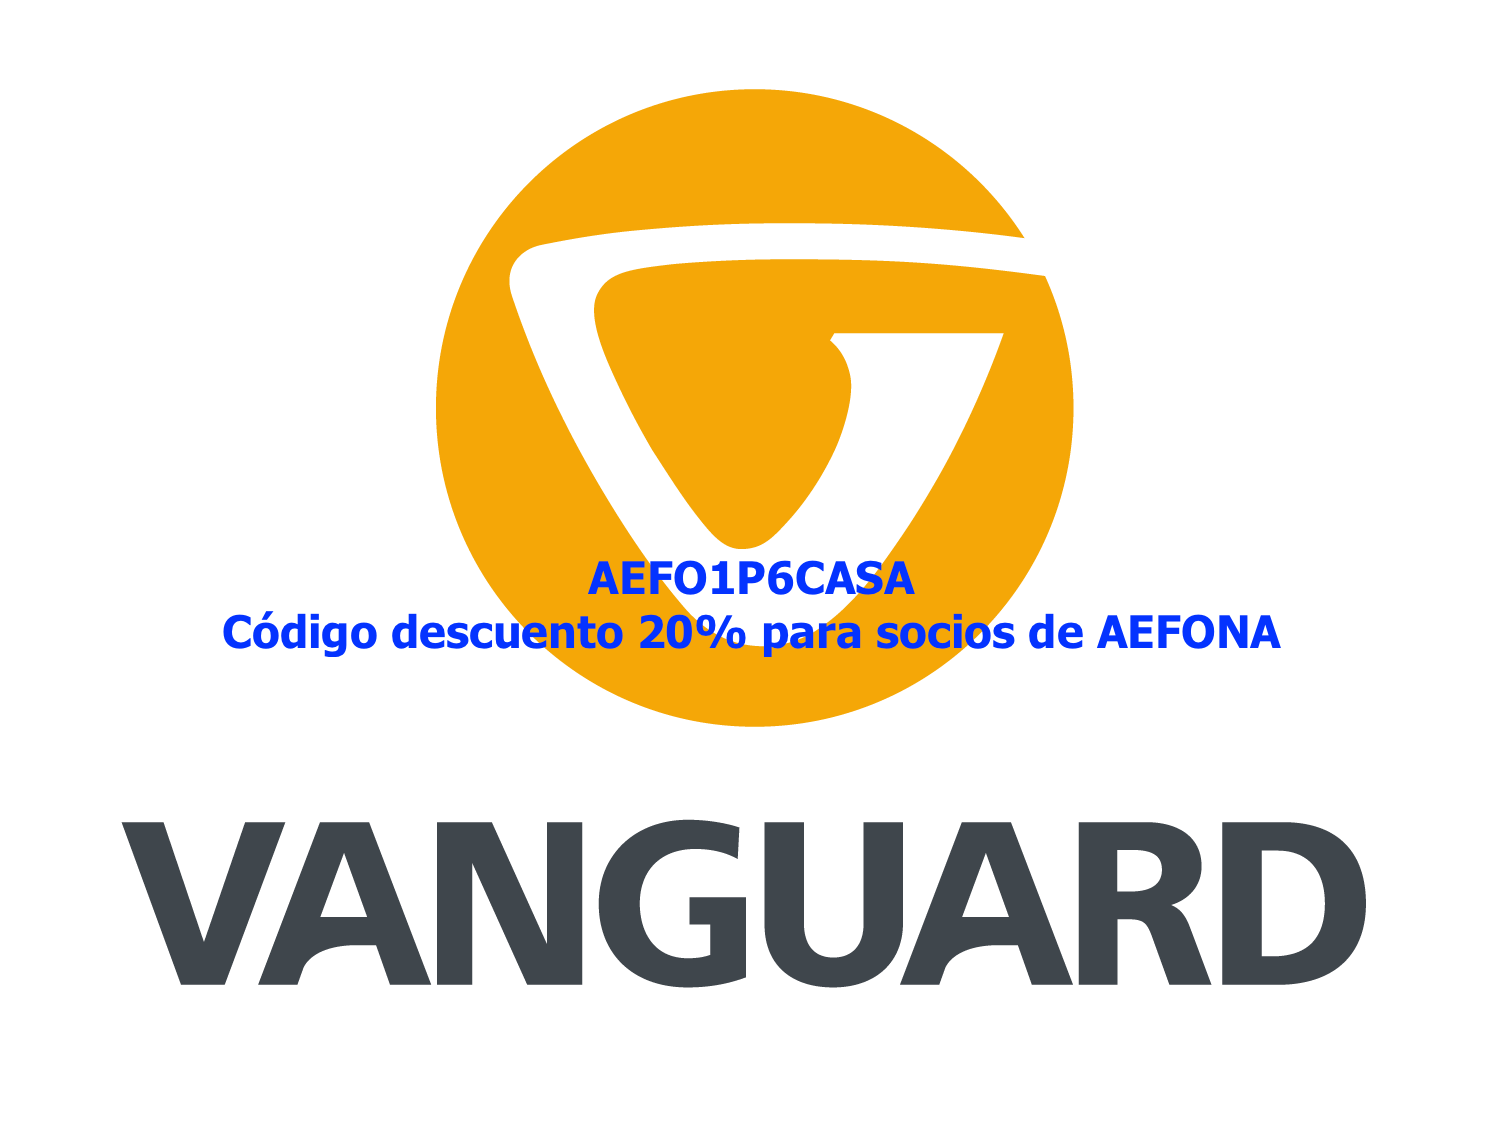 Vanguard_Código descuento AEFONA